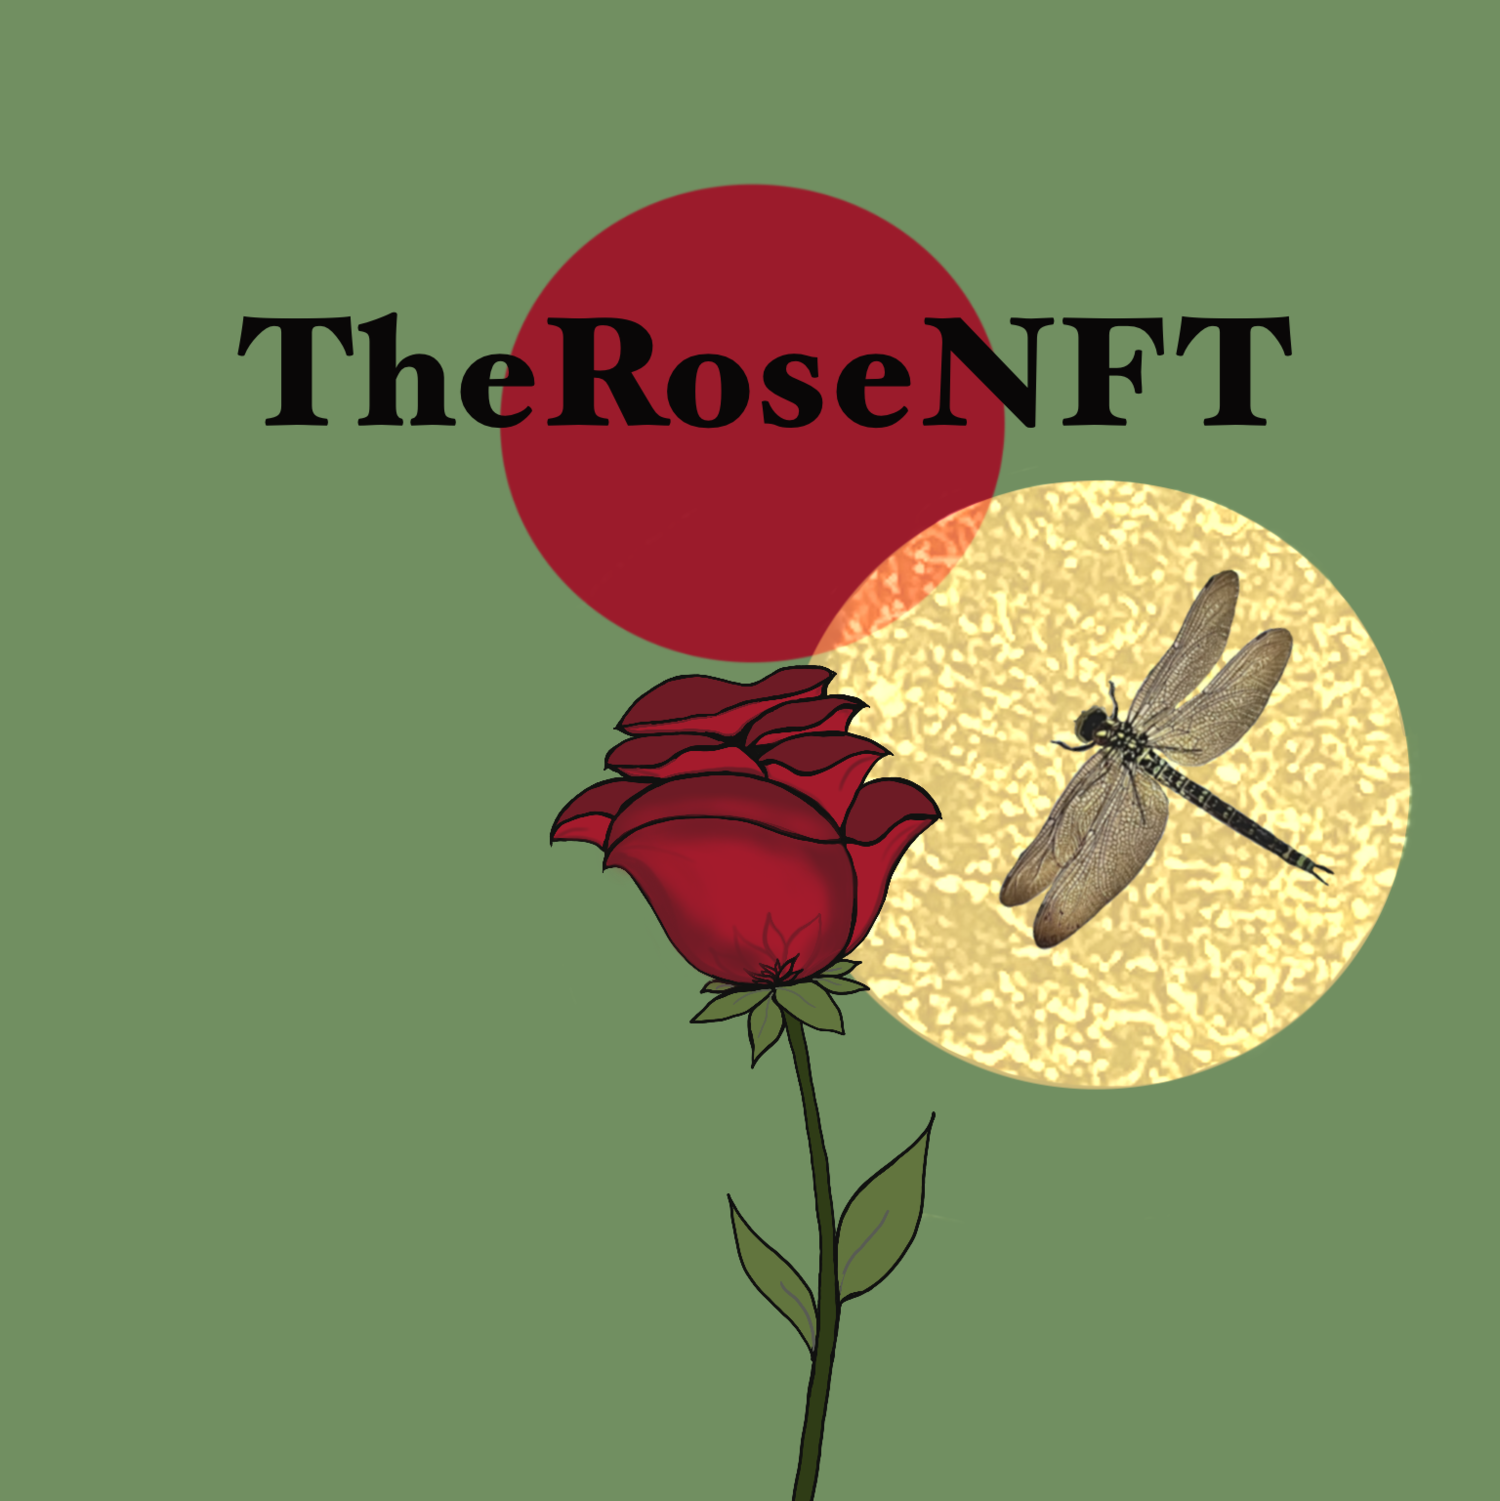 The Rose NFT